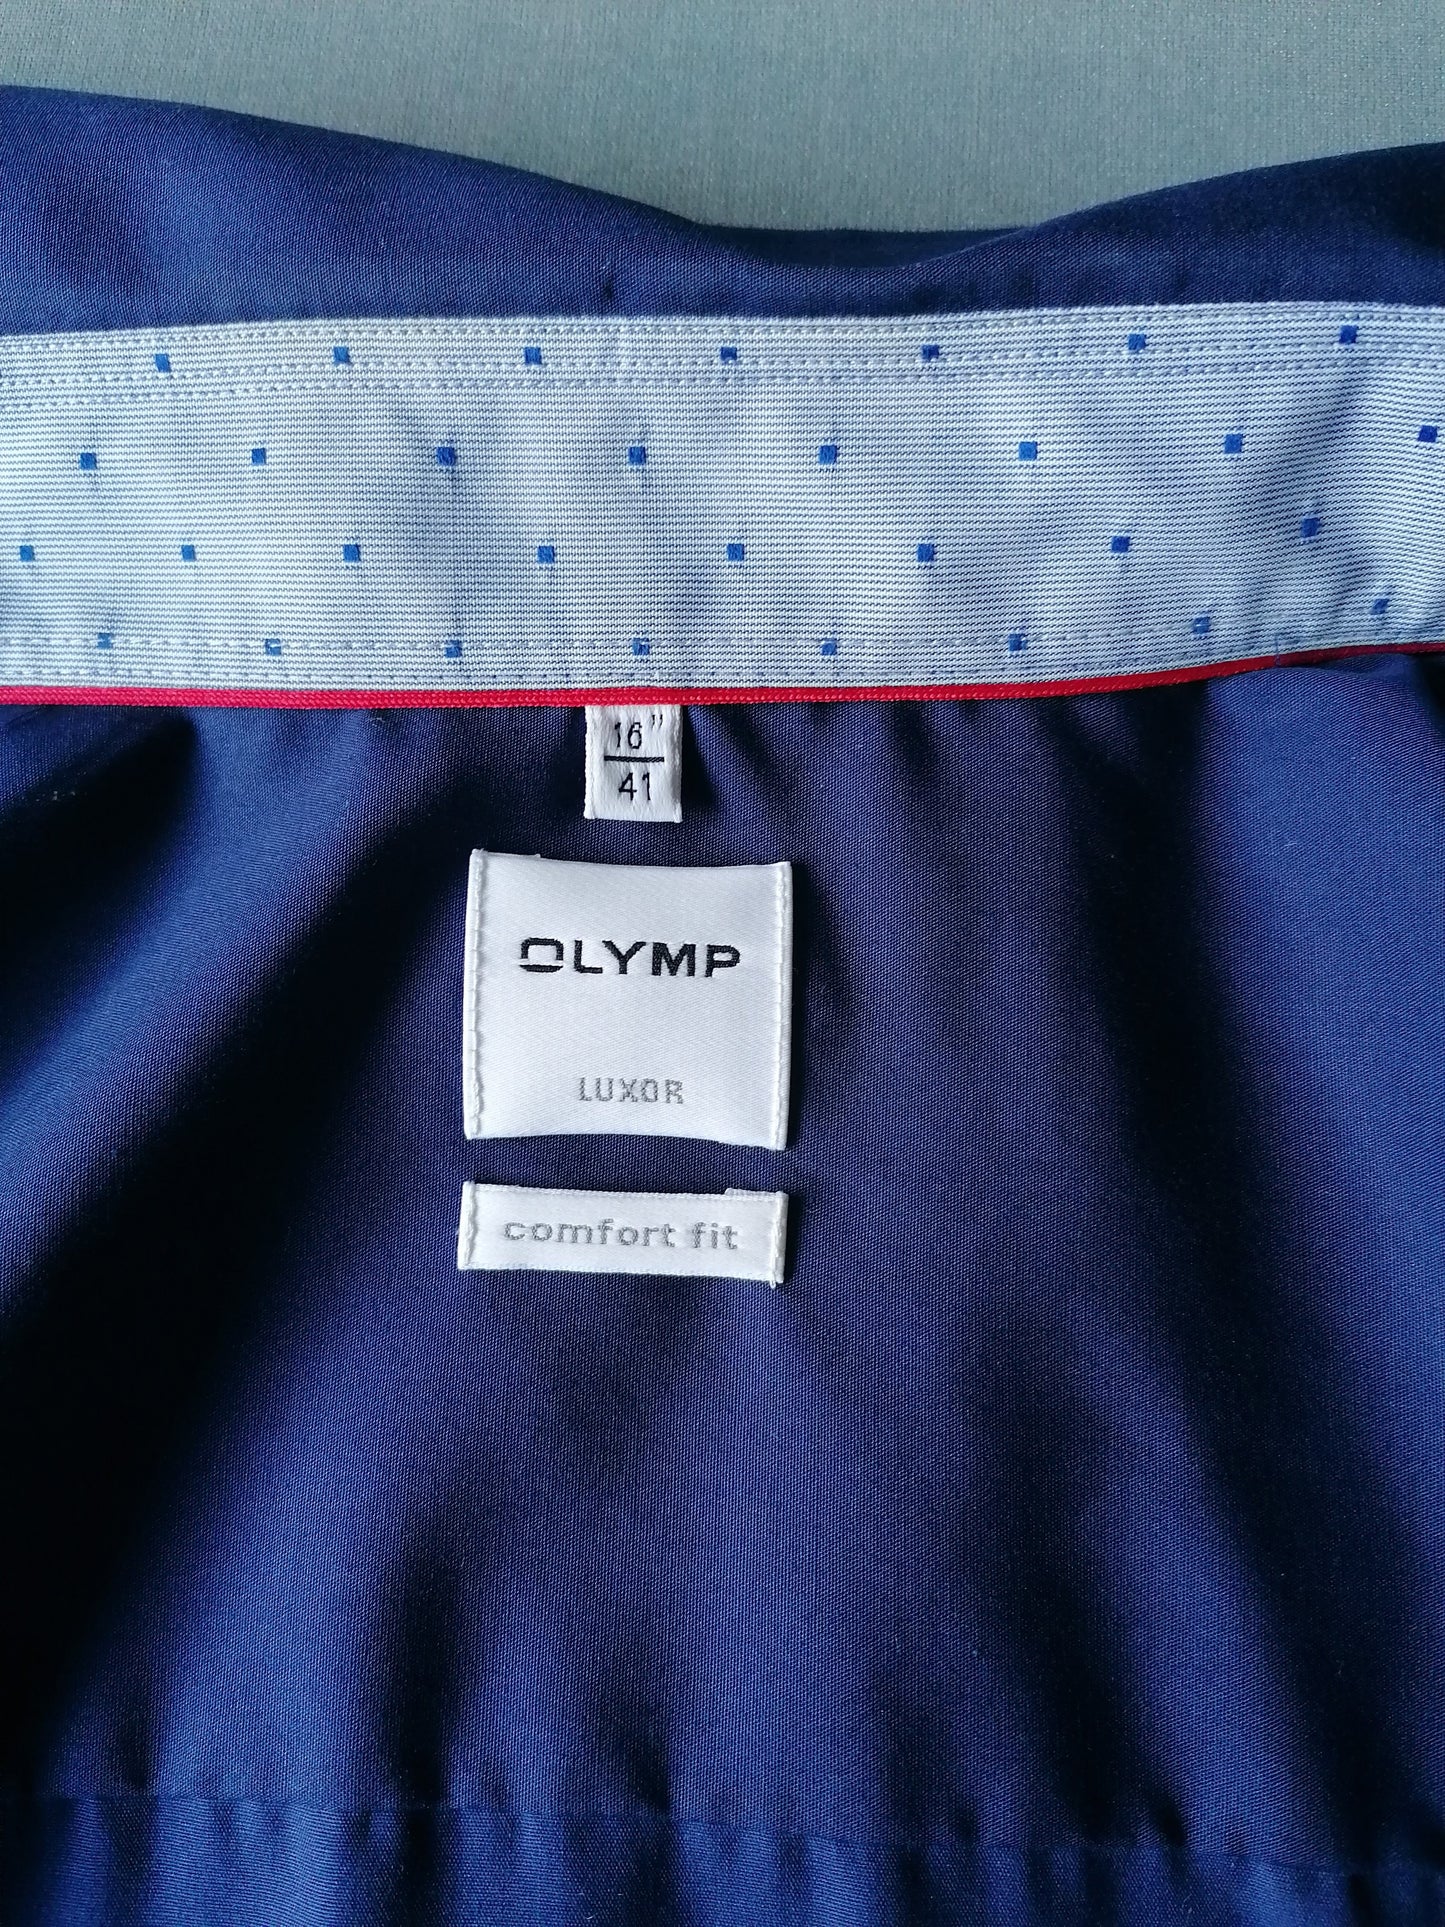 Olymp Luxor overhemd. Donker Blauw gekleurd. Maat 41 / L. Comfort Fit.